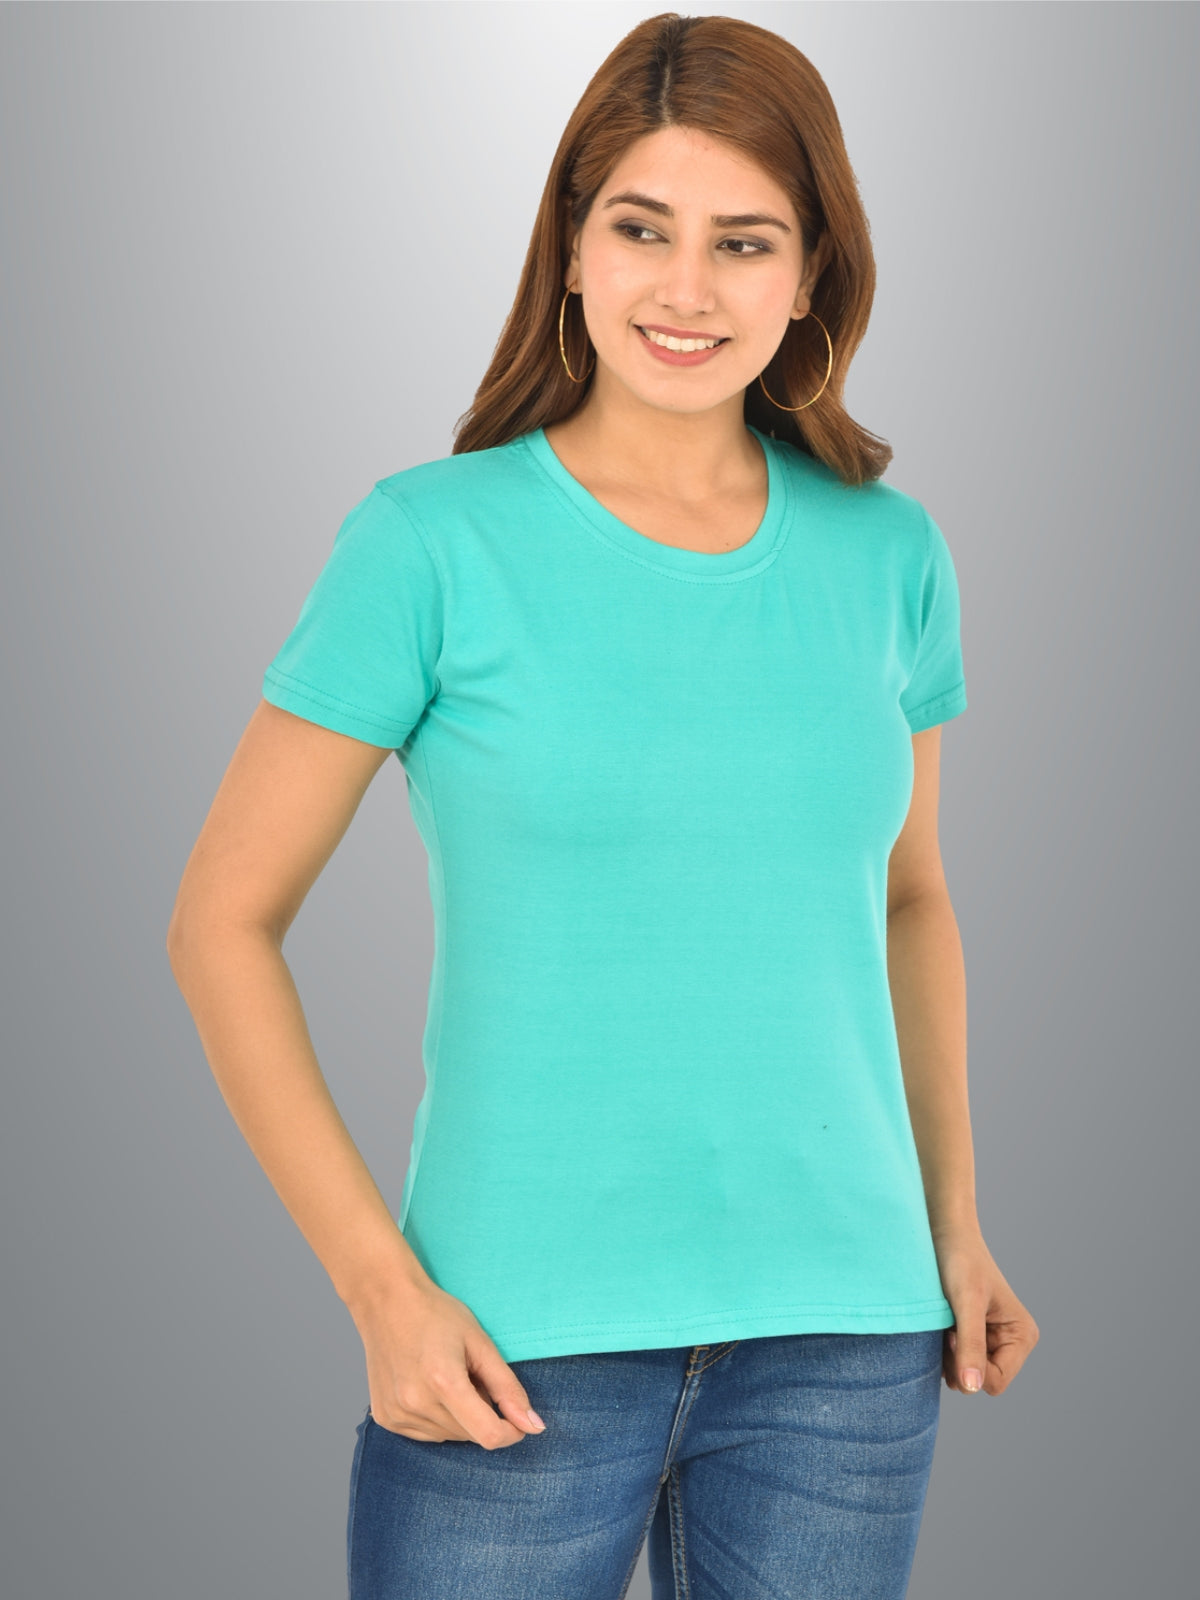 Womens Turquoise Half Sleeves Cotton Plain T-shirt